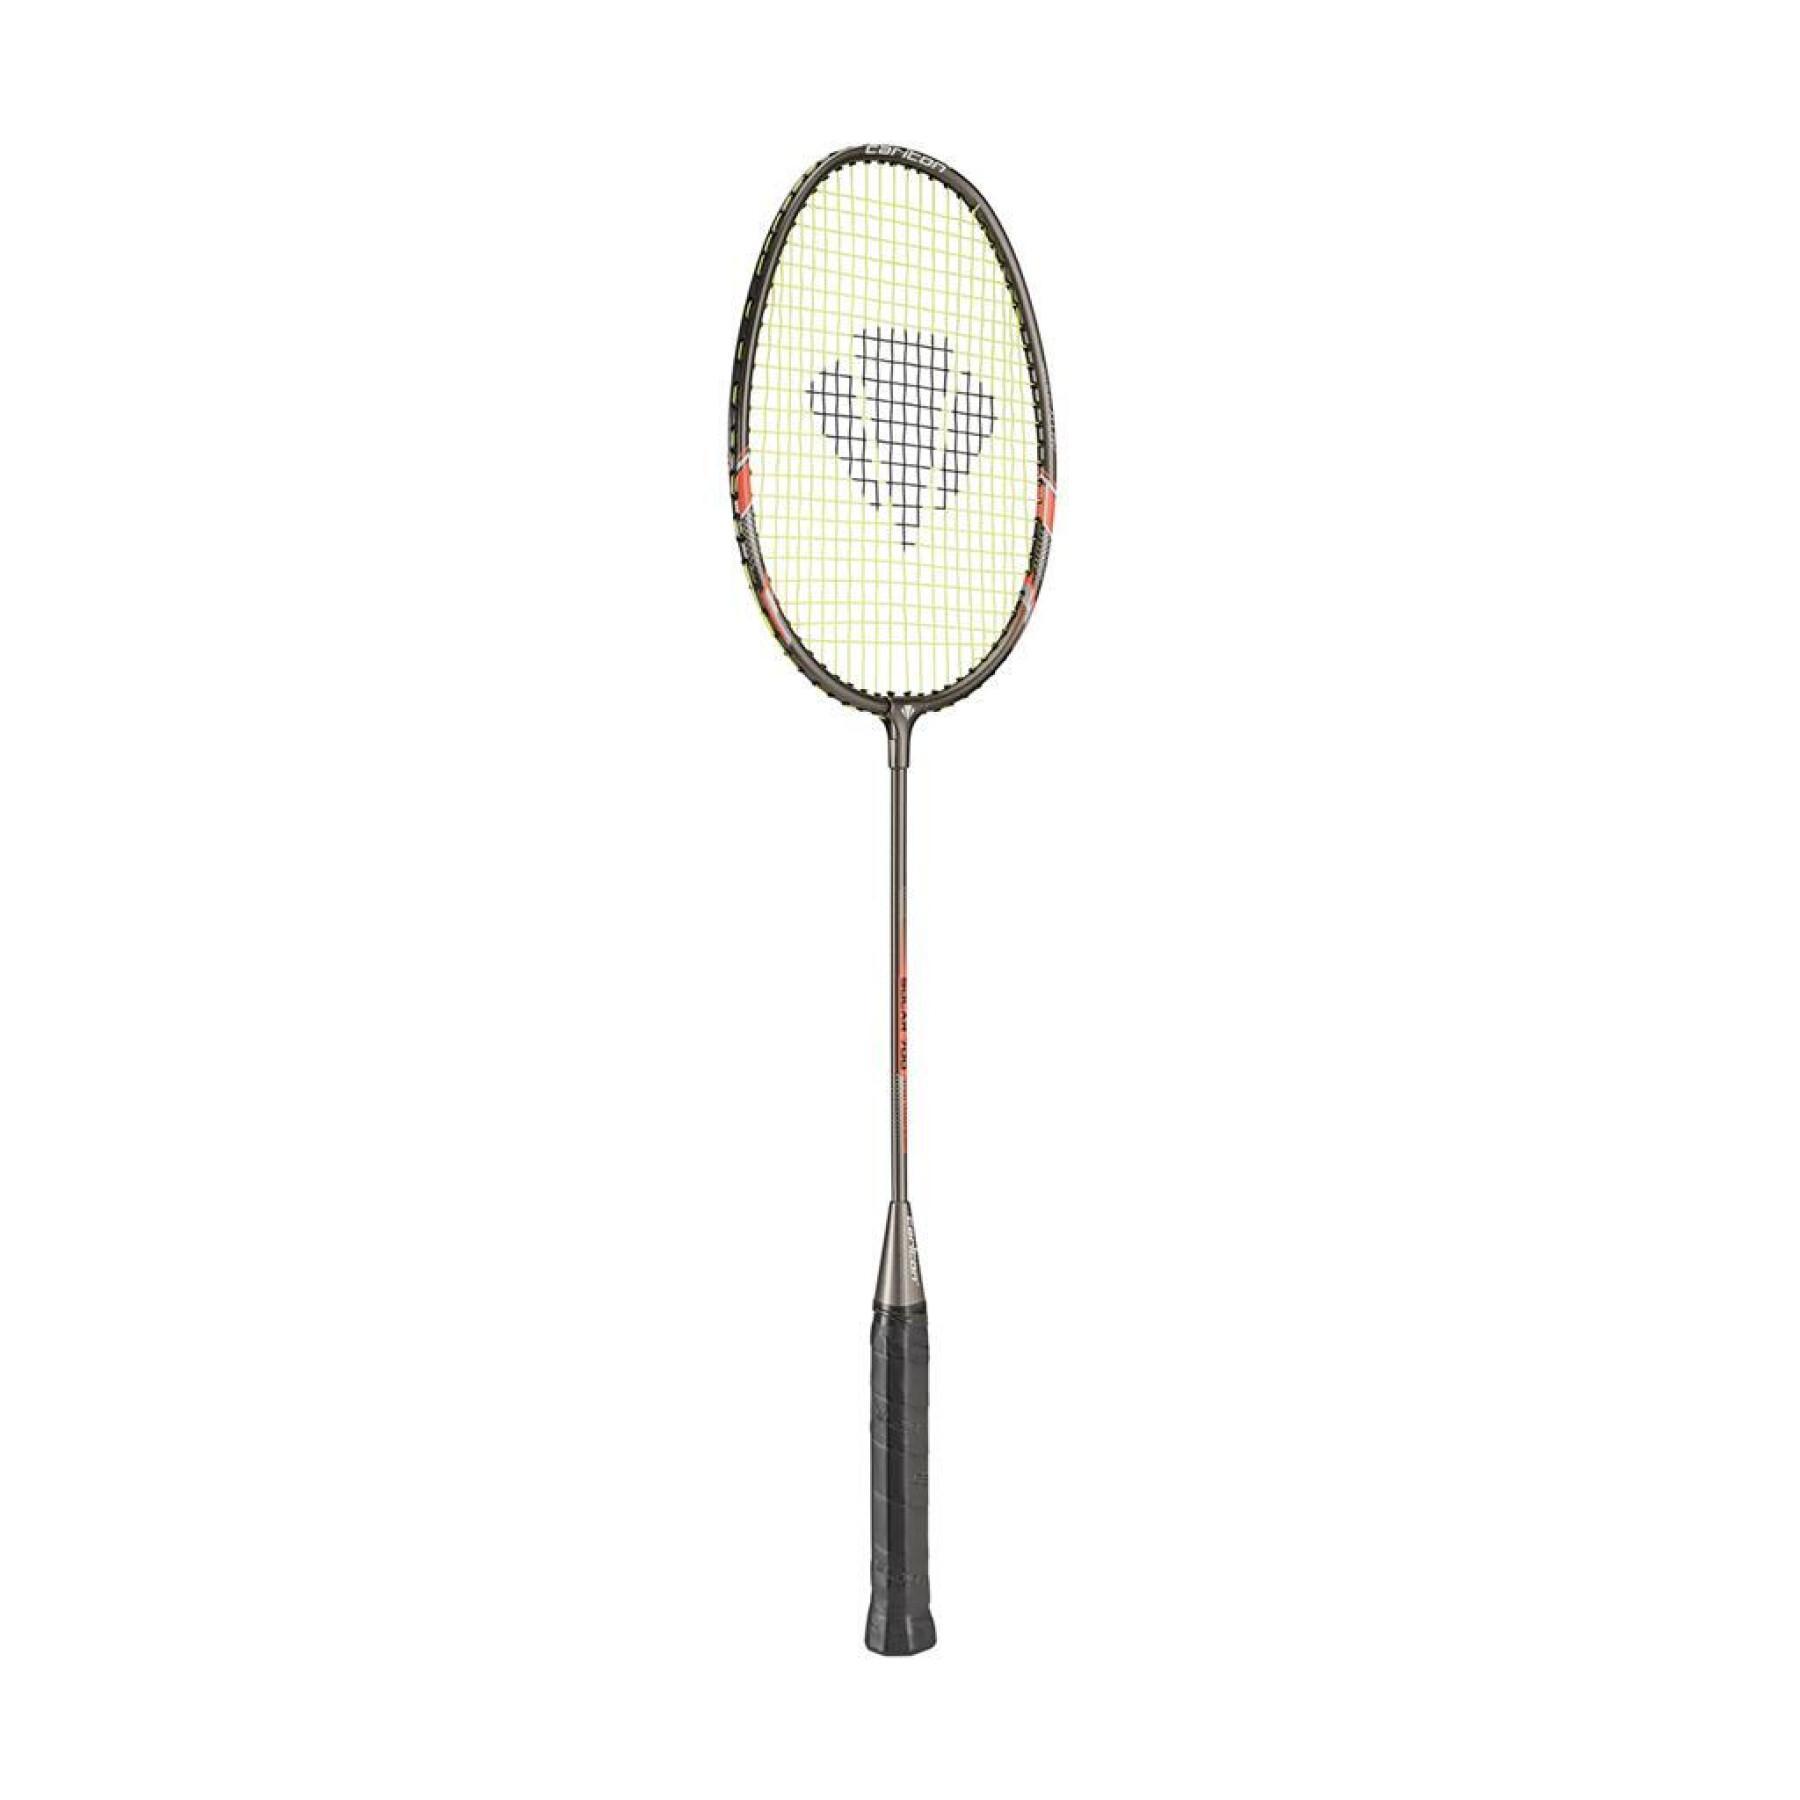 Racchetta da badminton Carlton Solar 700 Gry G3 Nf Eu